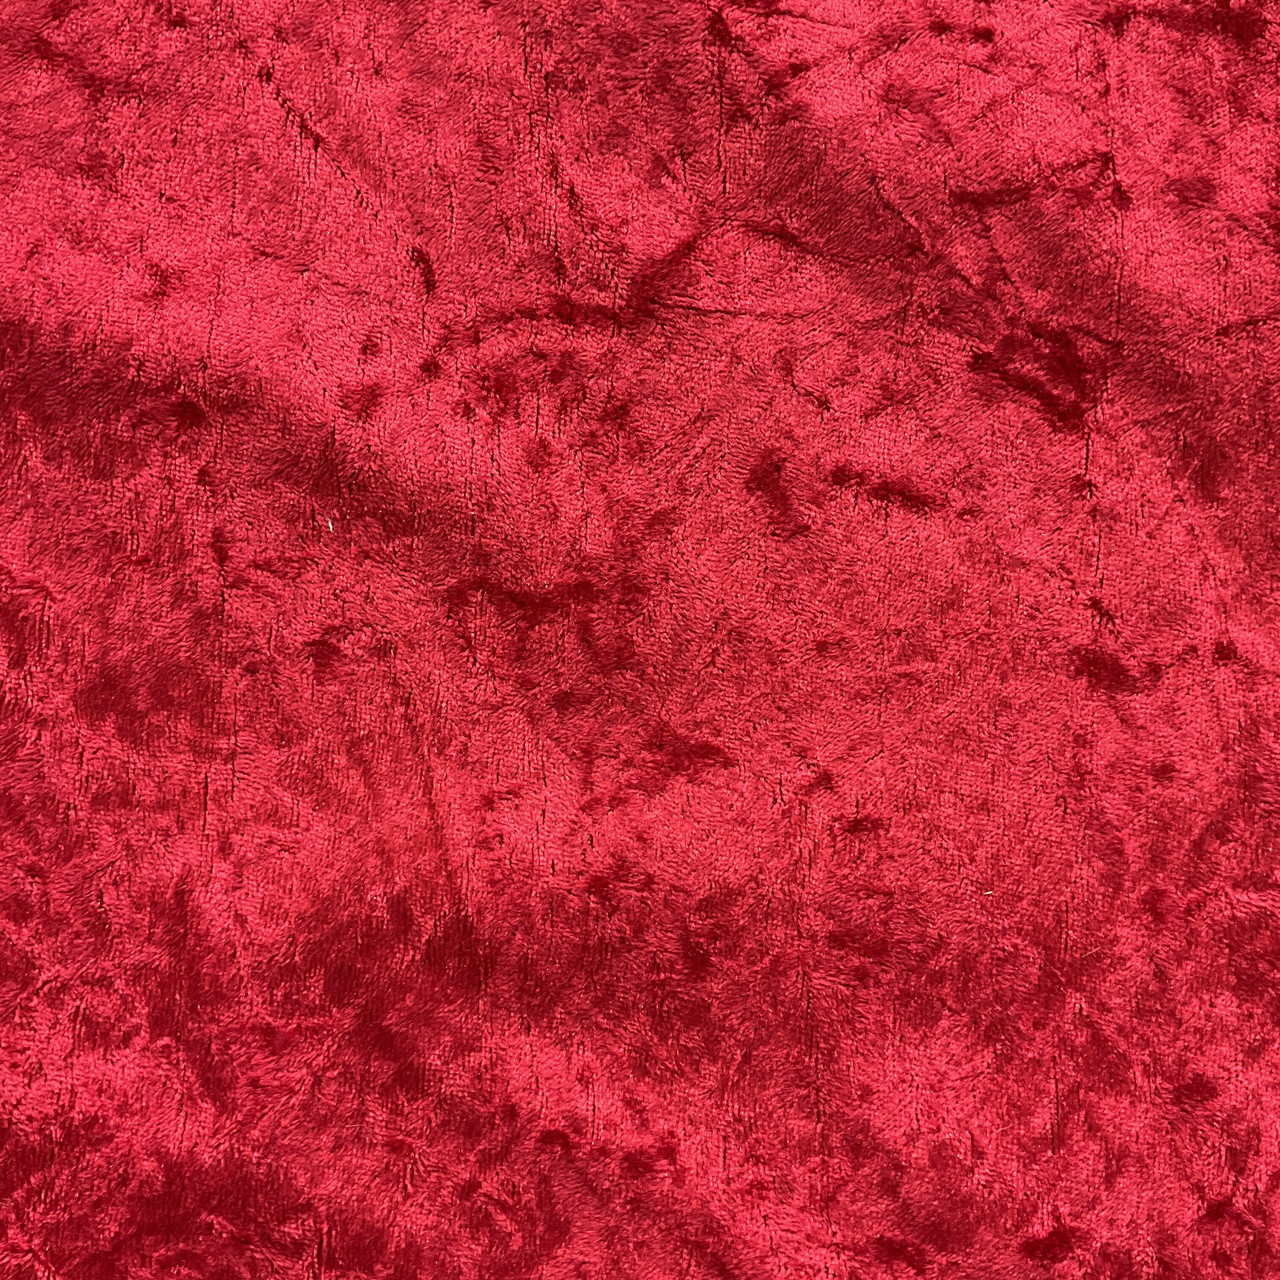 Red Velvet Fabric: Fabrics from Italy, SKU 00044346 at $86 — Buy